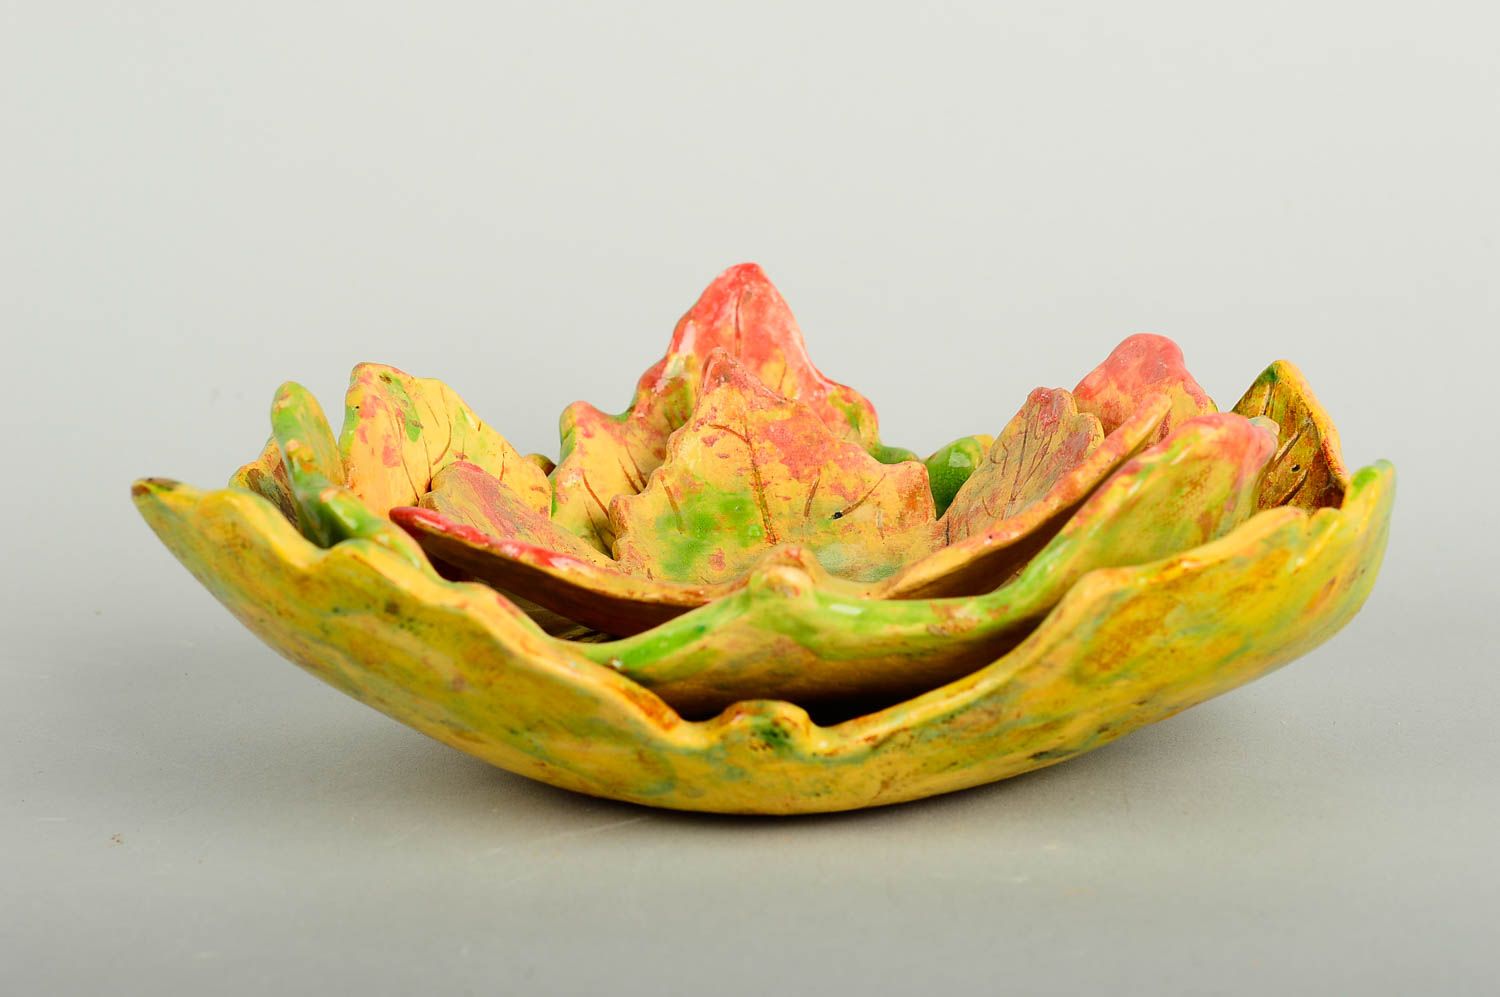 Handmade ceramic plate clay plates 3 pieces unusual kitchenware ideas photo 4